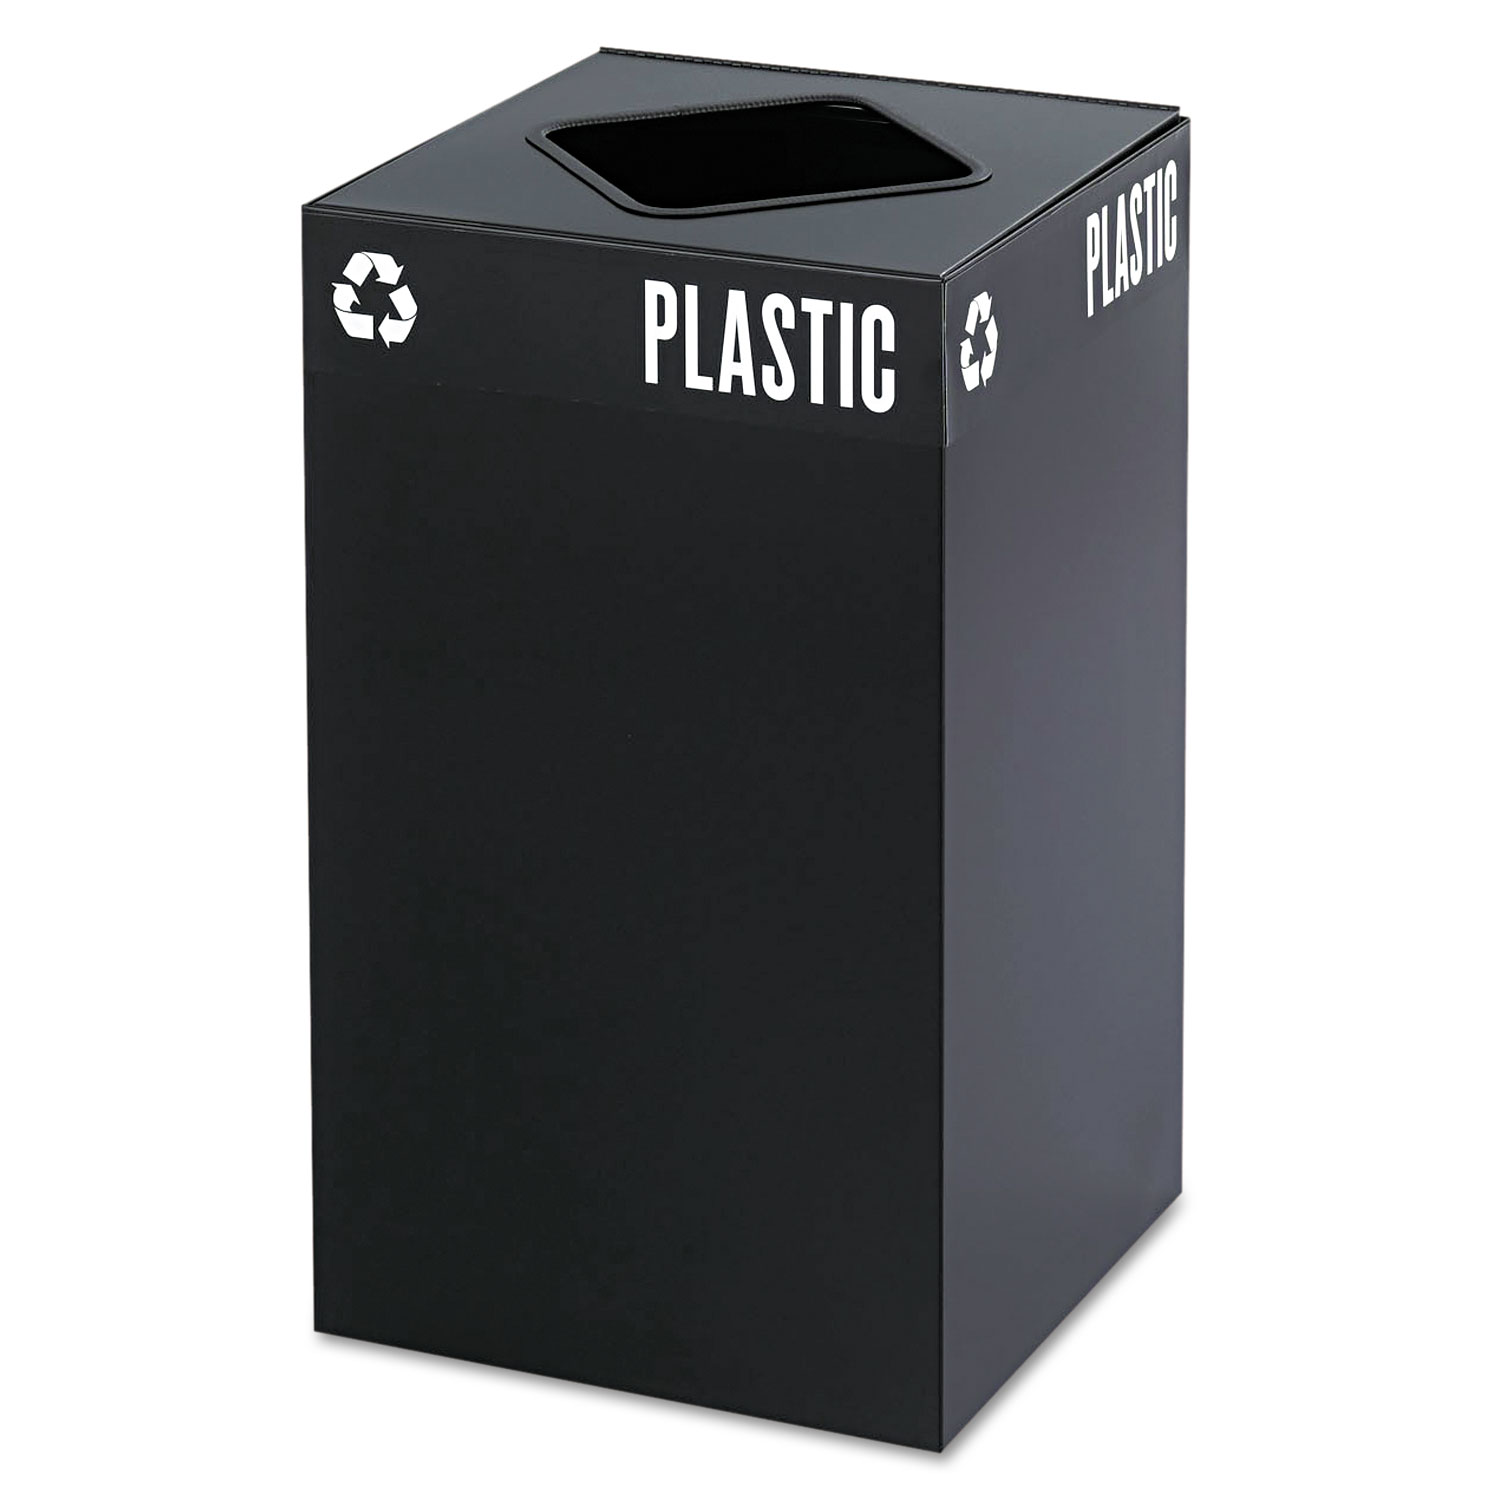  Safco 2981BL Public Square Plastic-Recycling Container, Square, Steel, 25 gal, Black (SAF2981BL) 